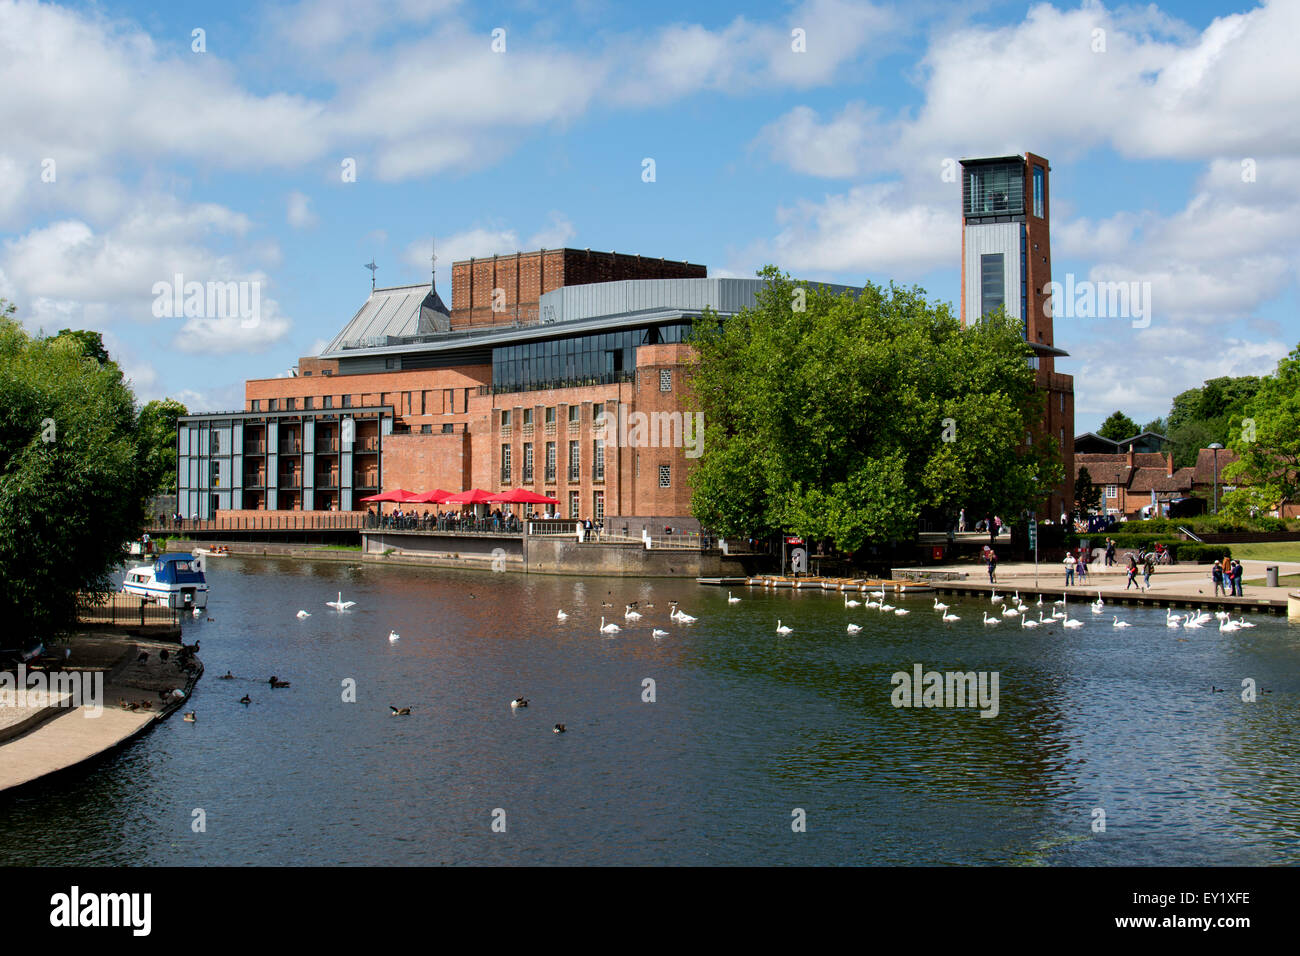 RSC Theatre and River Avon, Stratford-upon-Avon, UK Stock Photo